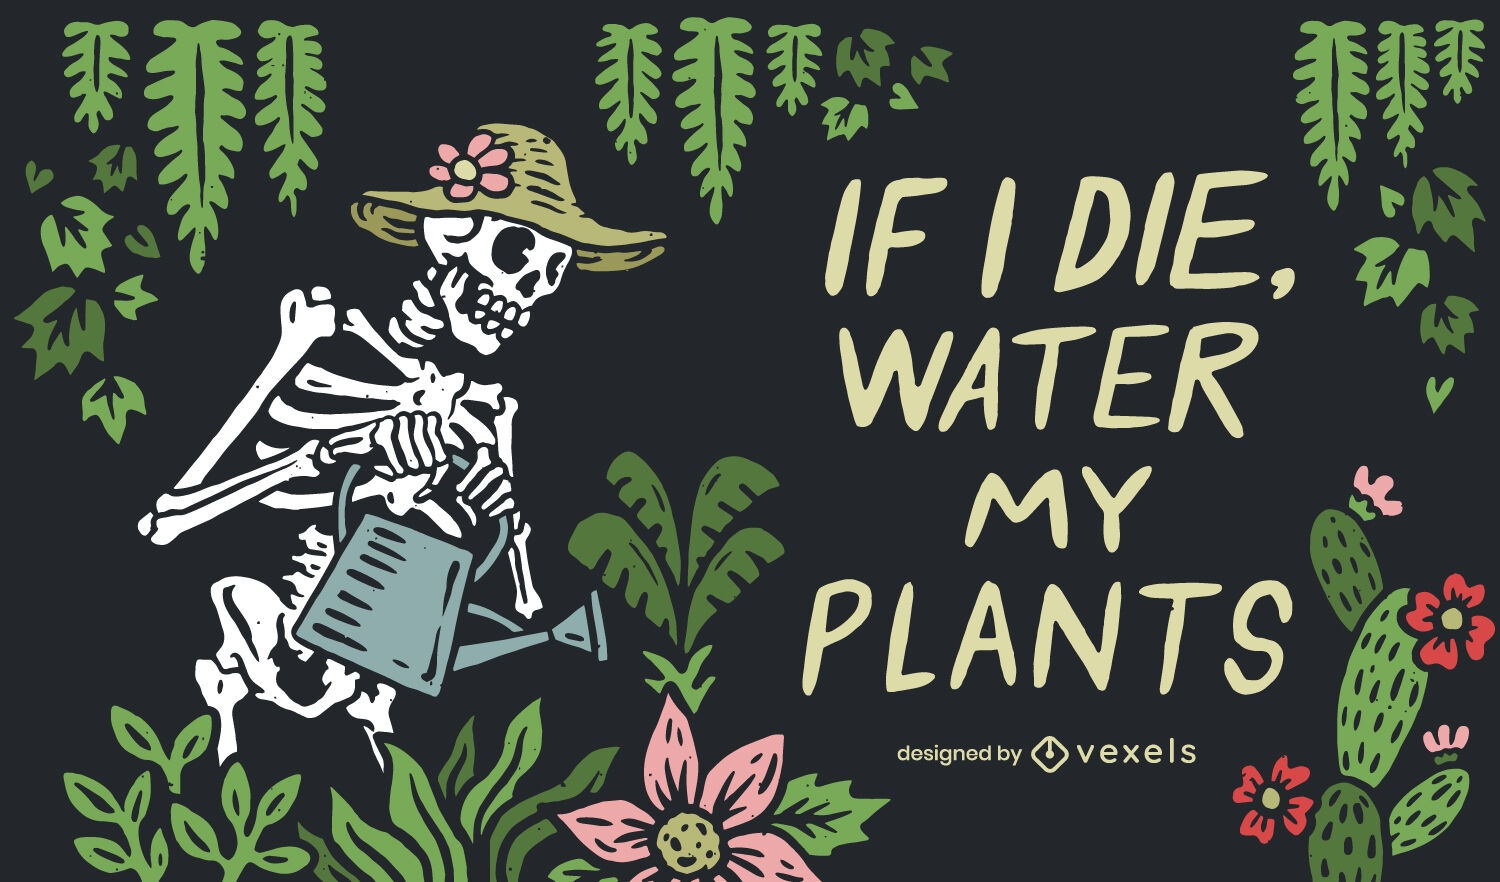 Water my plants skeleton illustration design